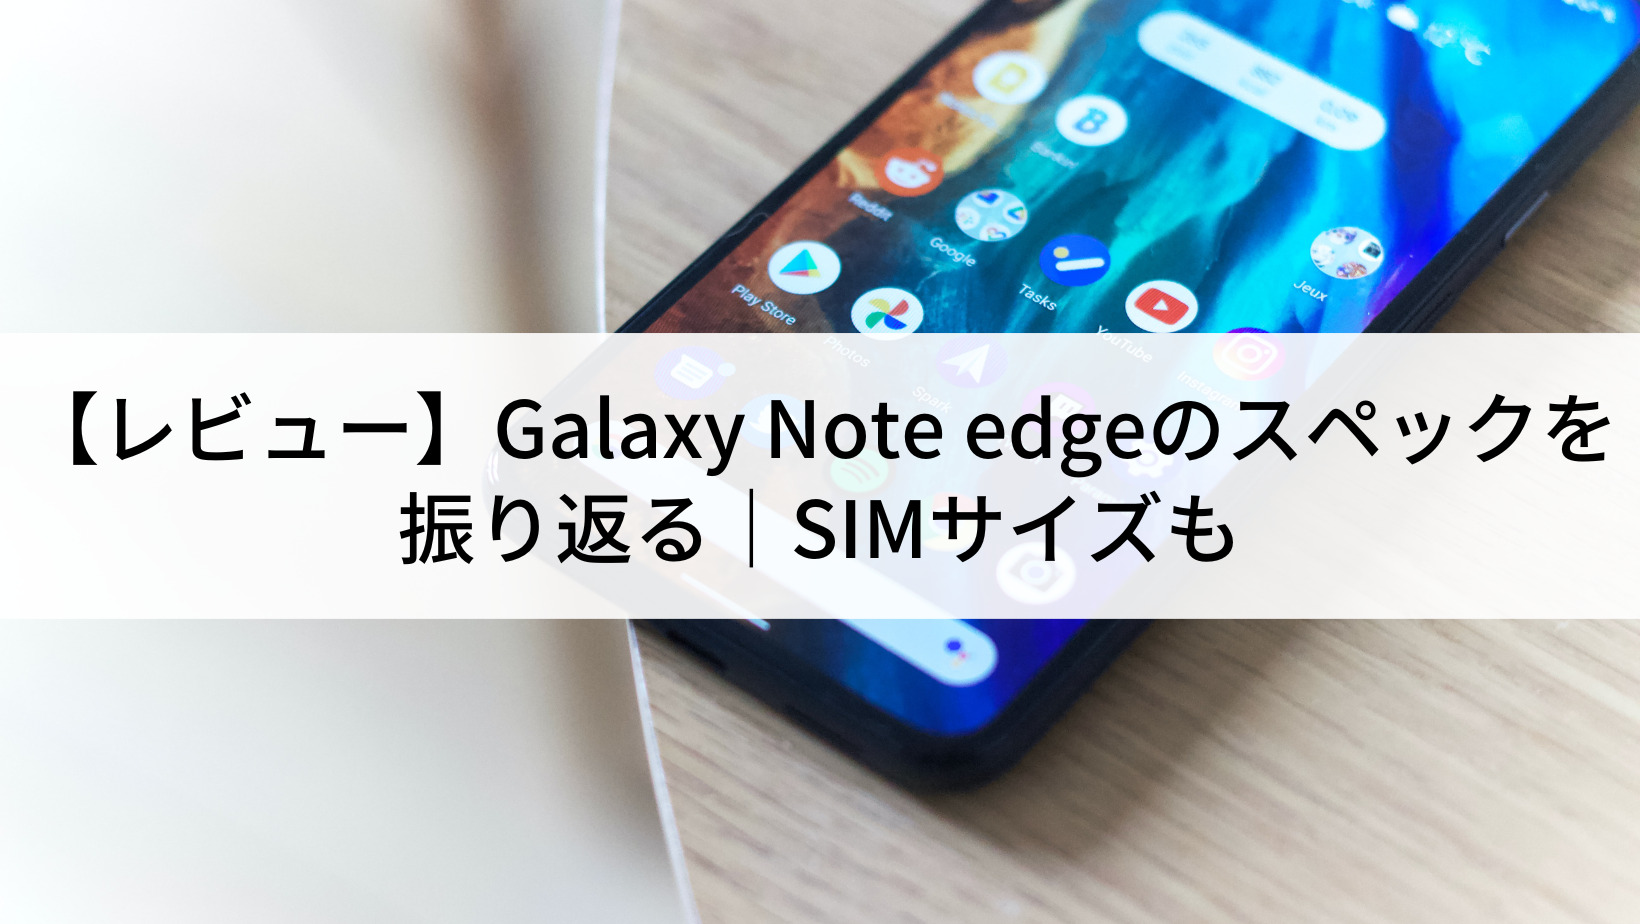 Galaxy Note edge